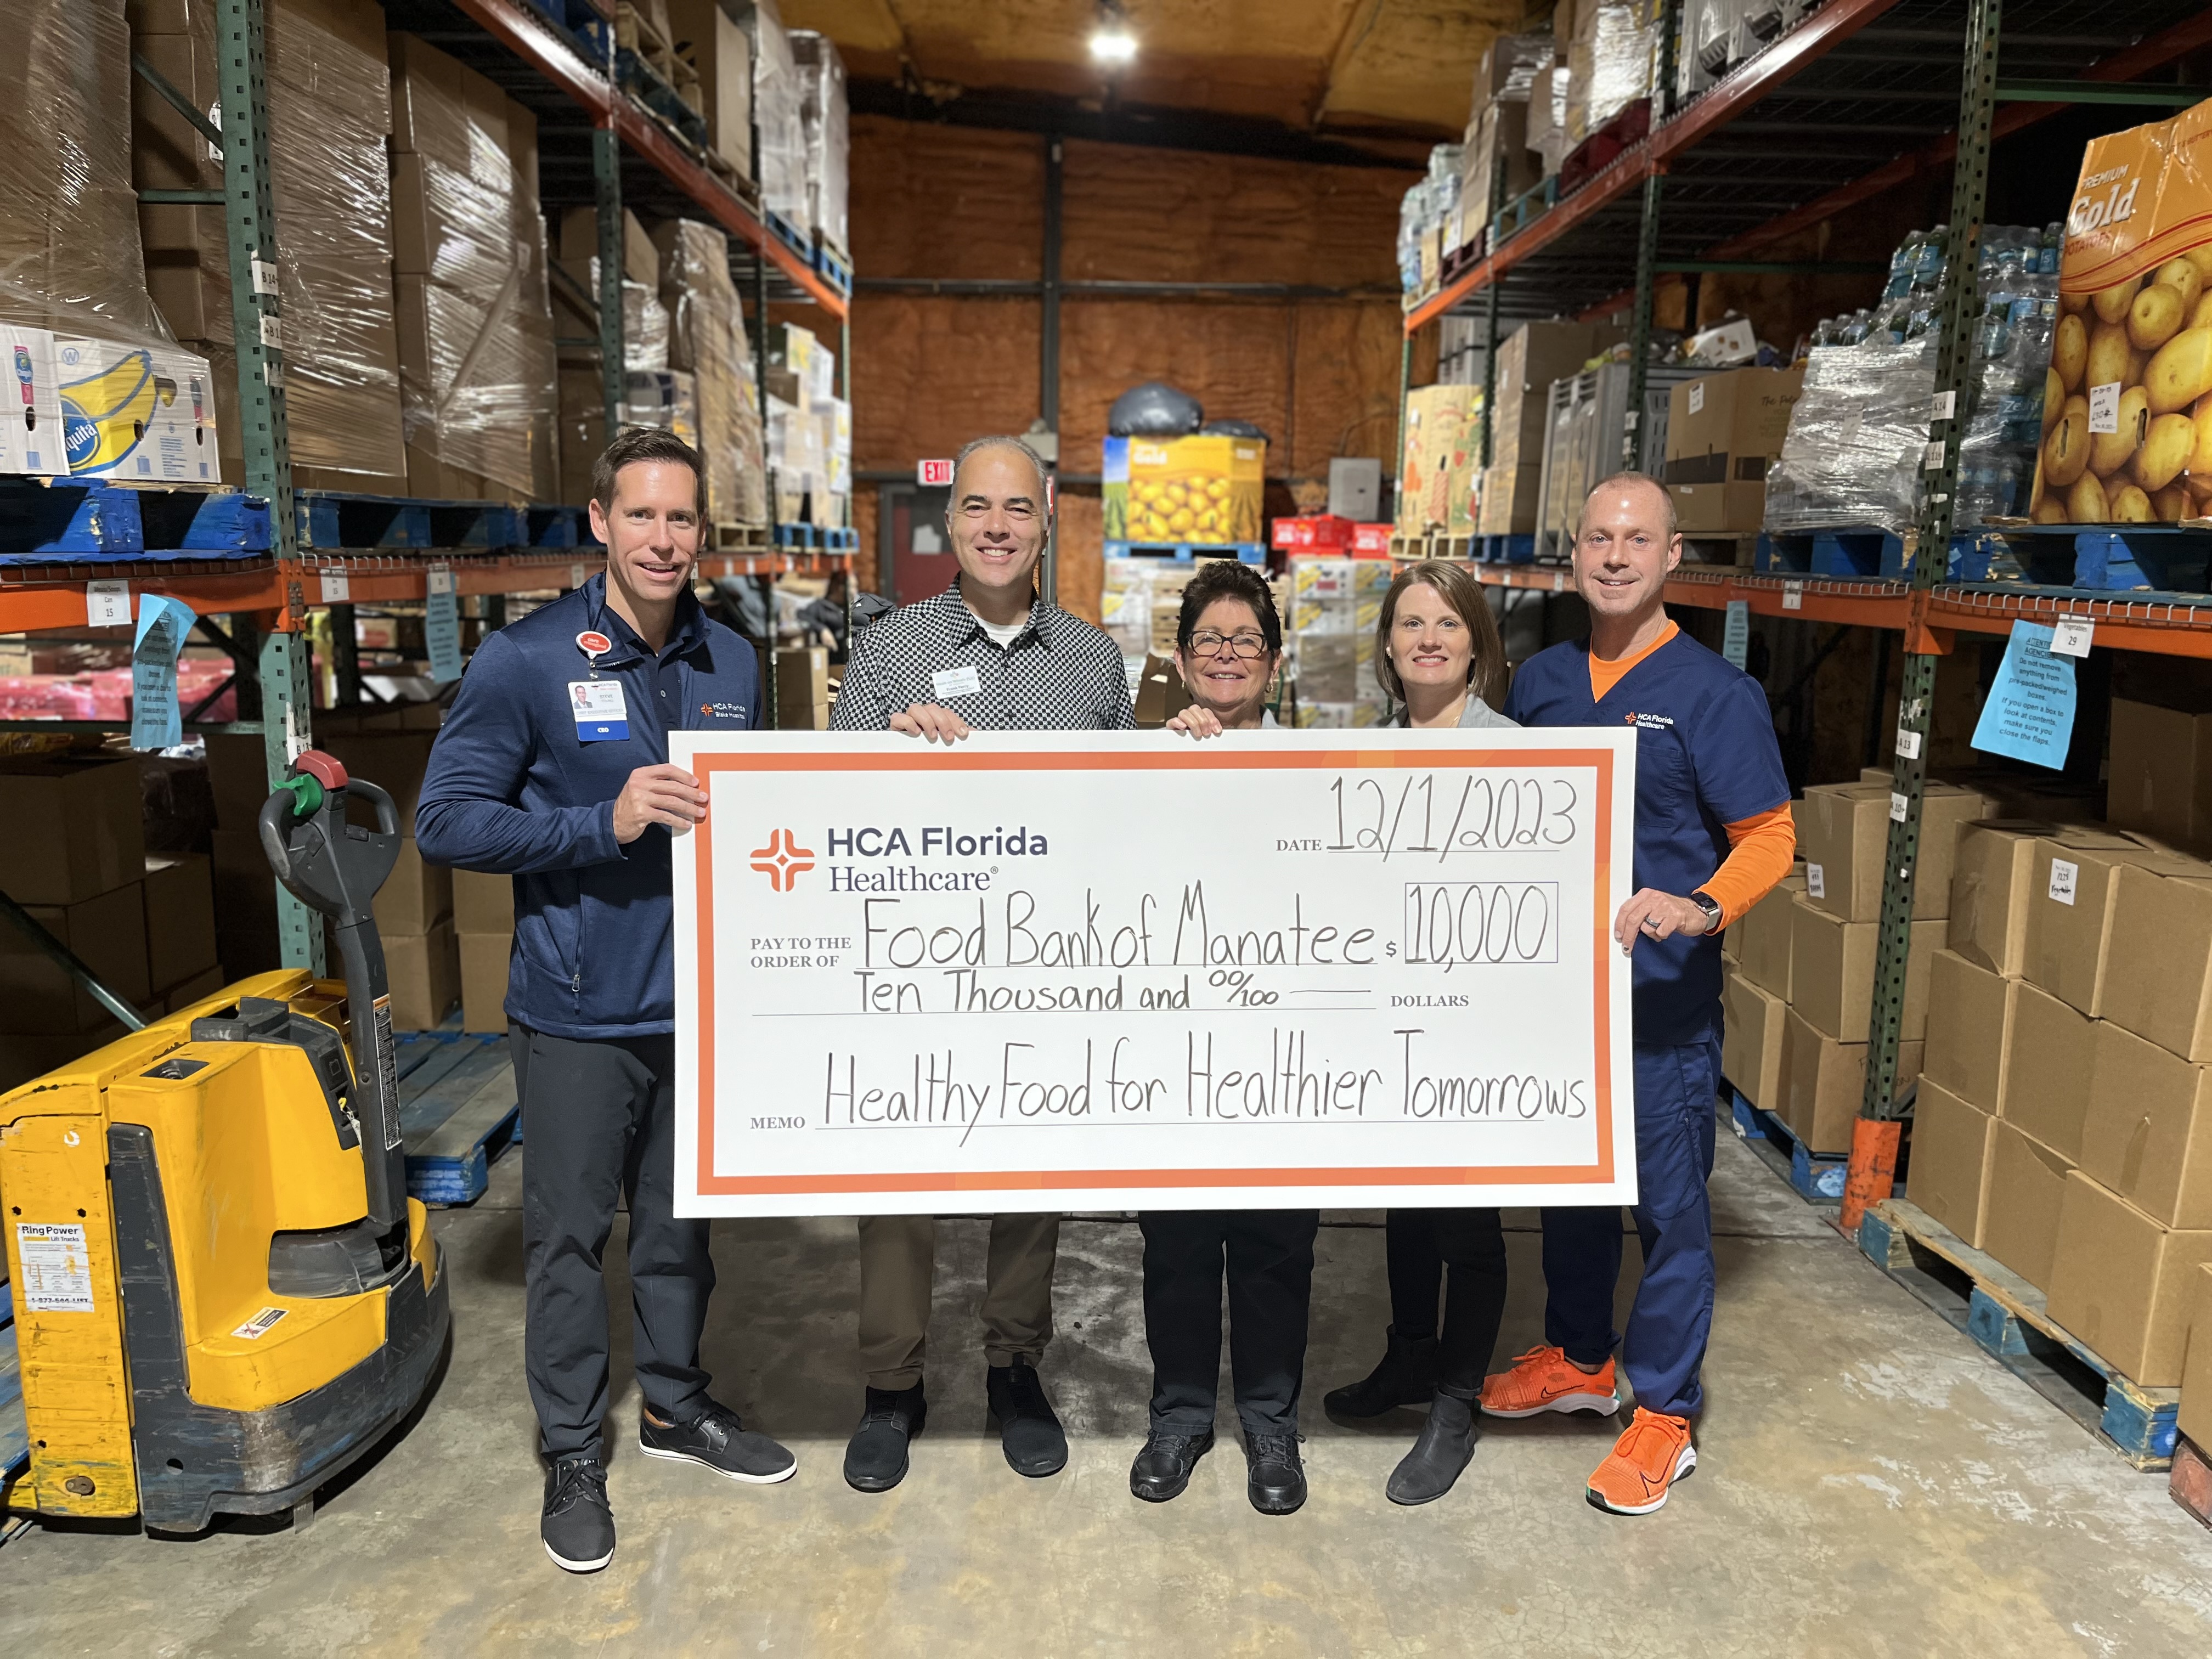 HCA Florida Blake Hospital donates $10,000 to support Meals on Wheels PLUS.